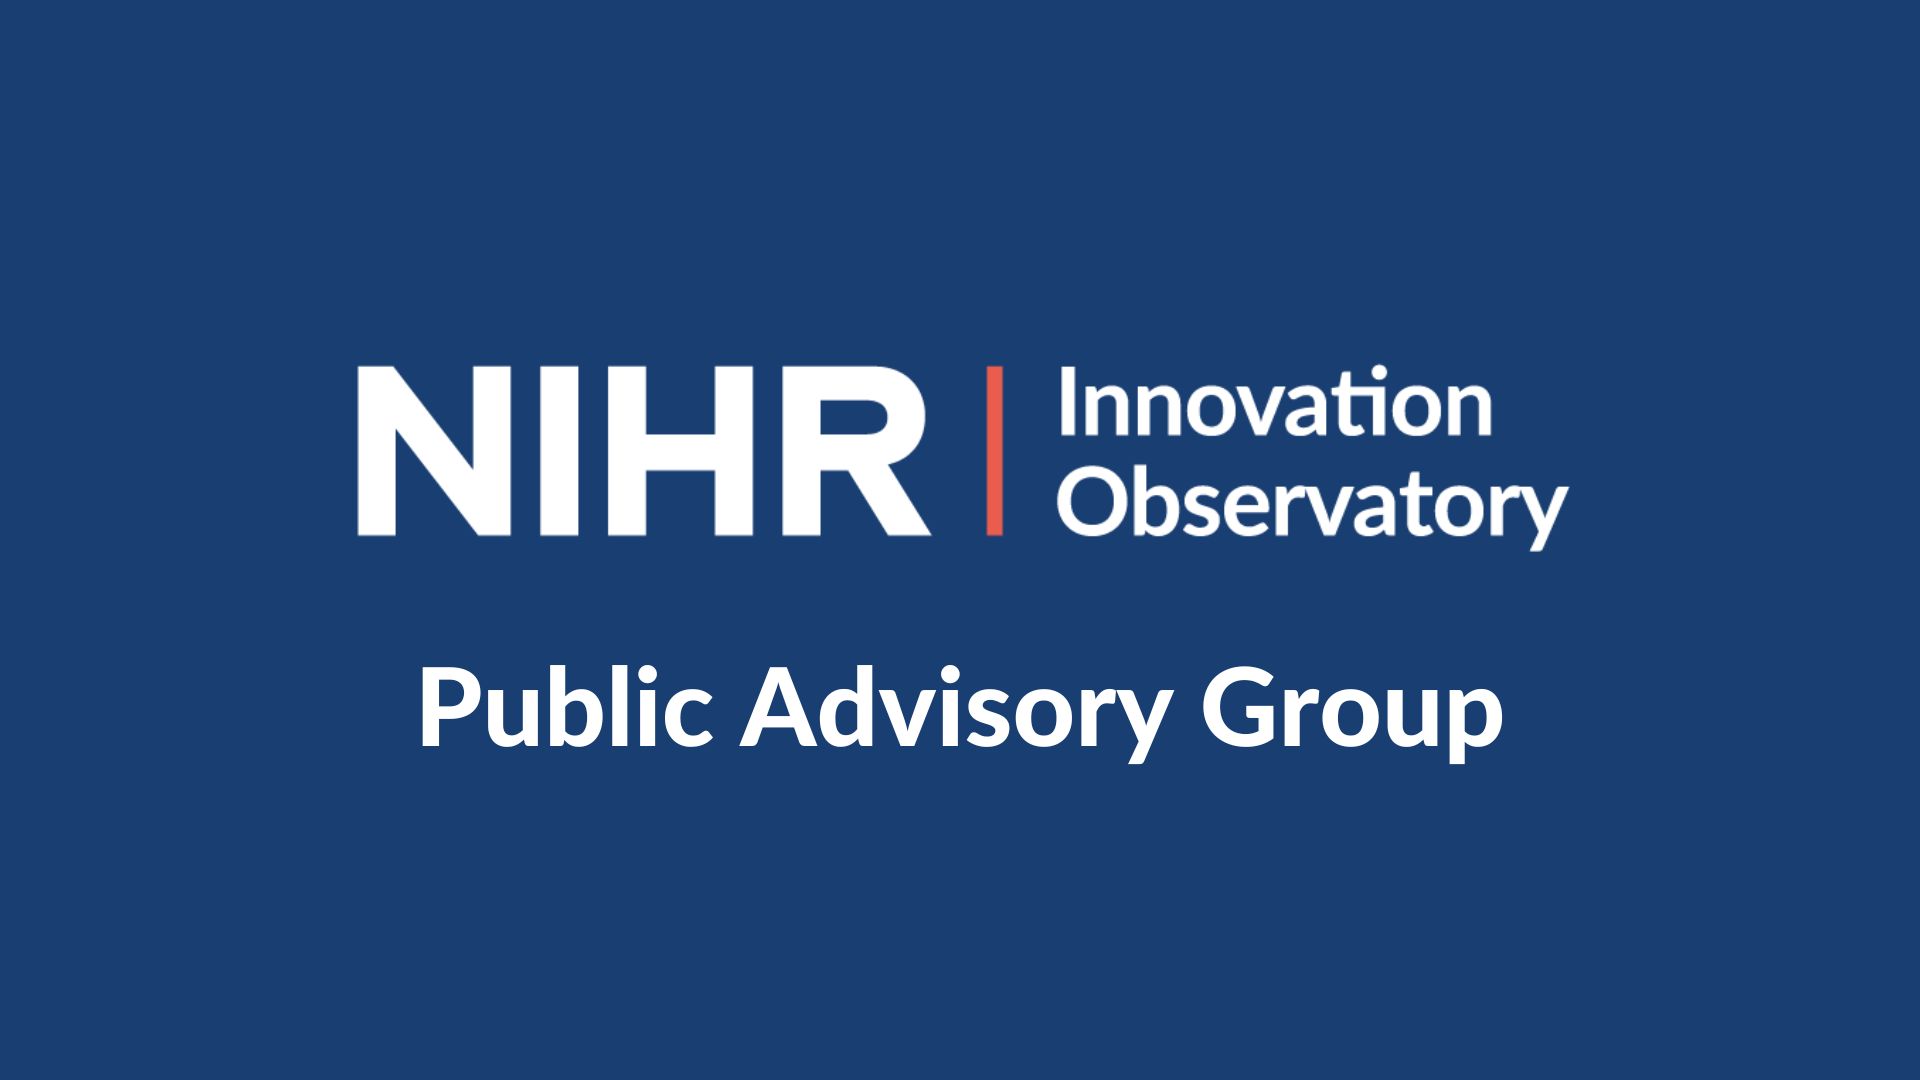 Image for: NIHR Innovation Observatory Public Advisory Group 